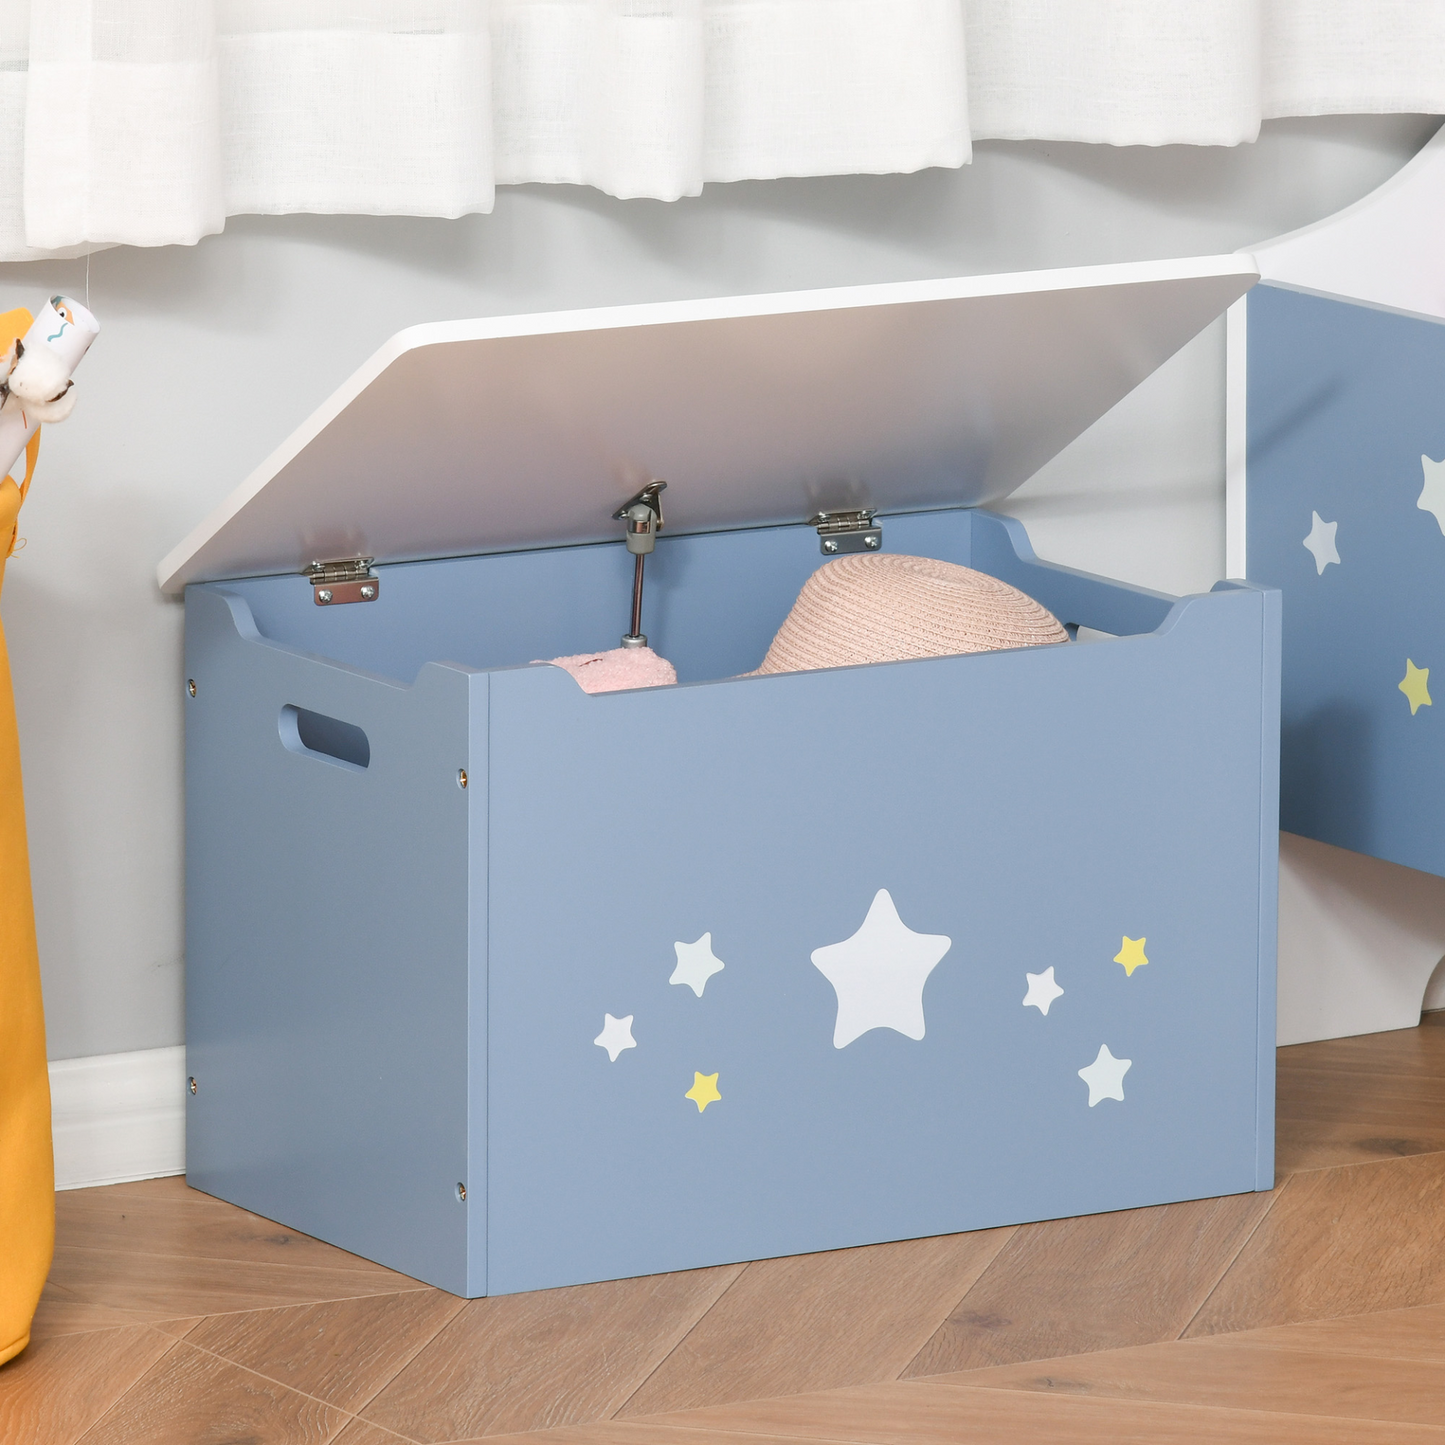 HOMCOM Kids Wooden Toy Box Children Storage Chest Organiser Side Handle Safety Hinge Play Room Furniture Blue